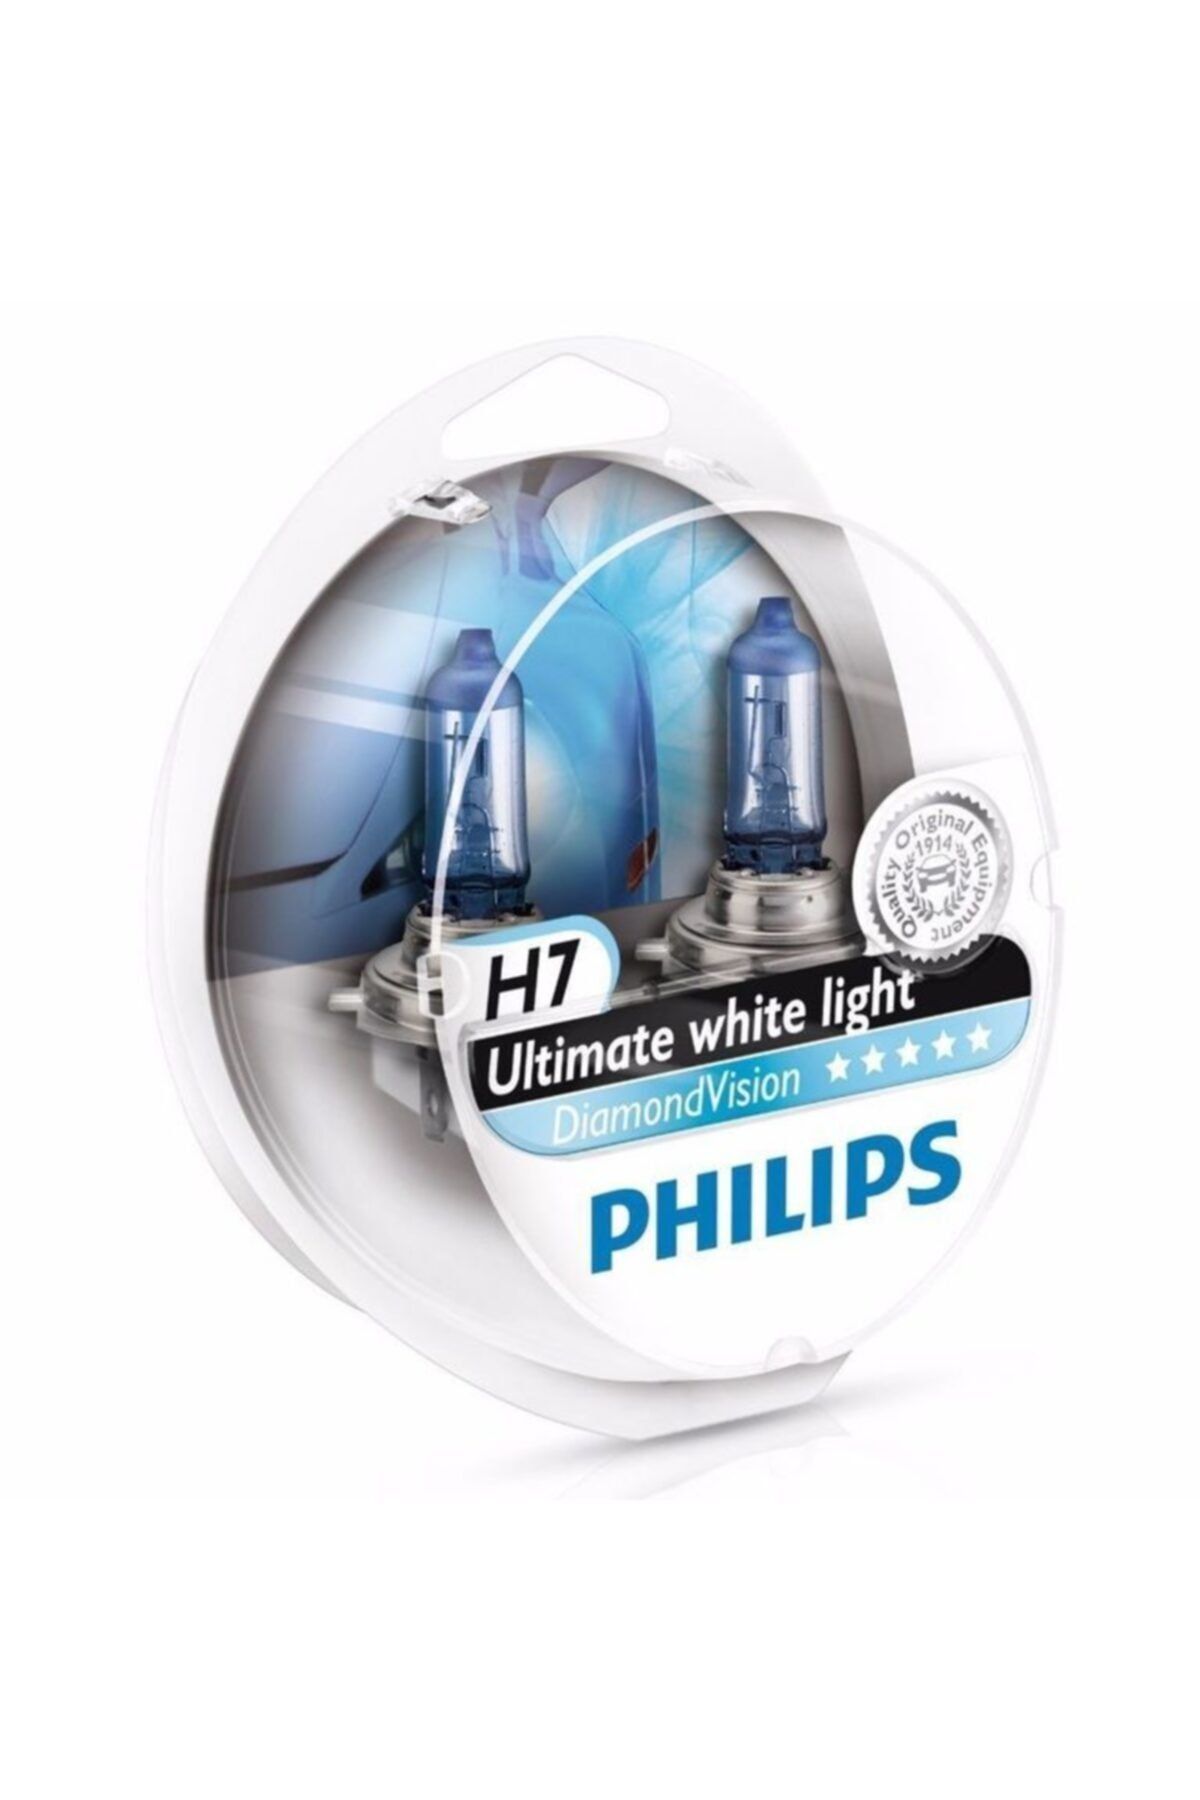 Philips Yeni X-treme Vision G-force H7 Otomobil Far Ampulü (12972xvgs2)  +%130 Fiyatı, Yorumları - Trendyol